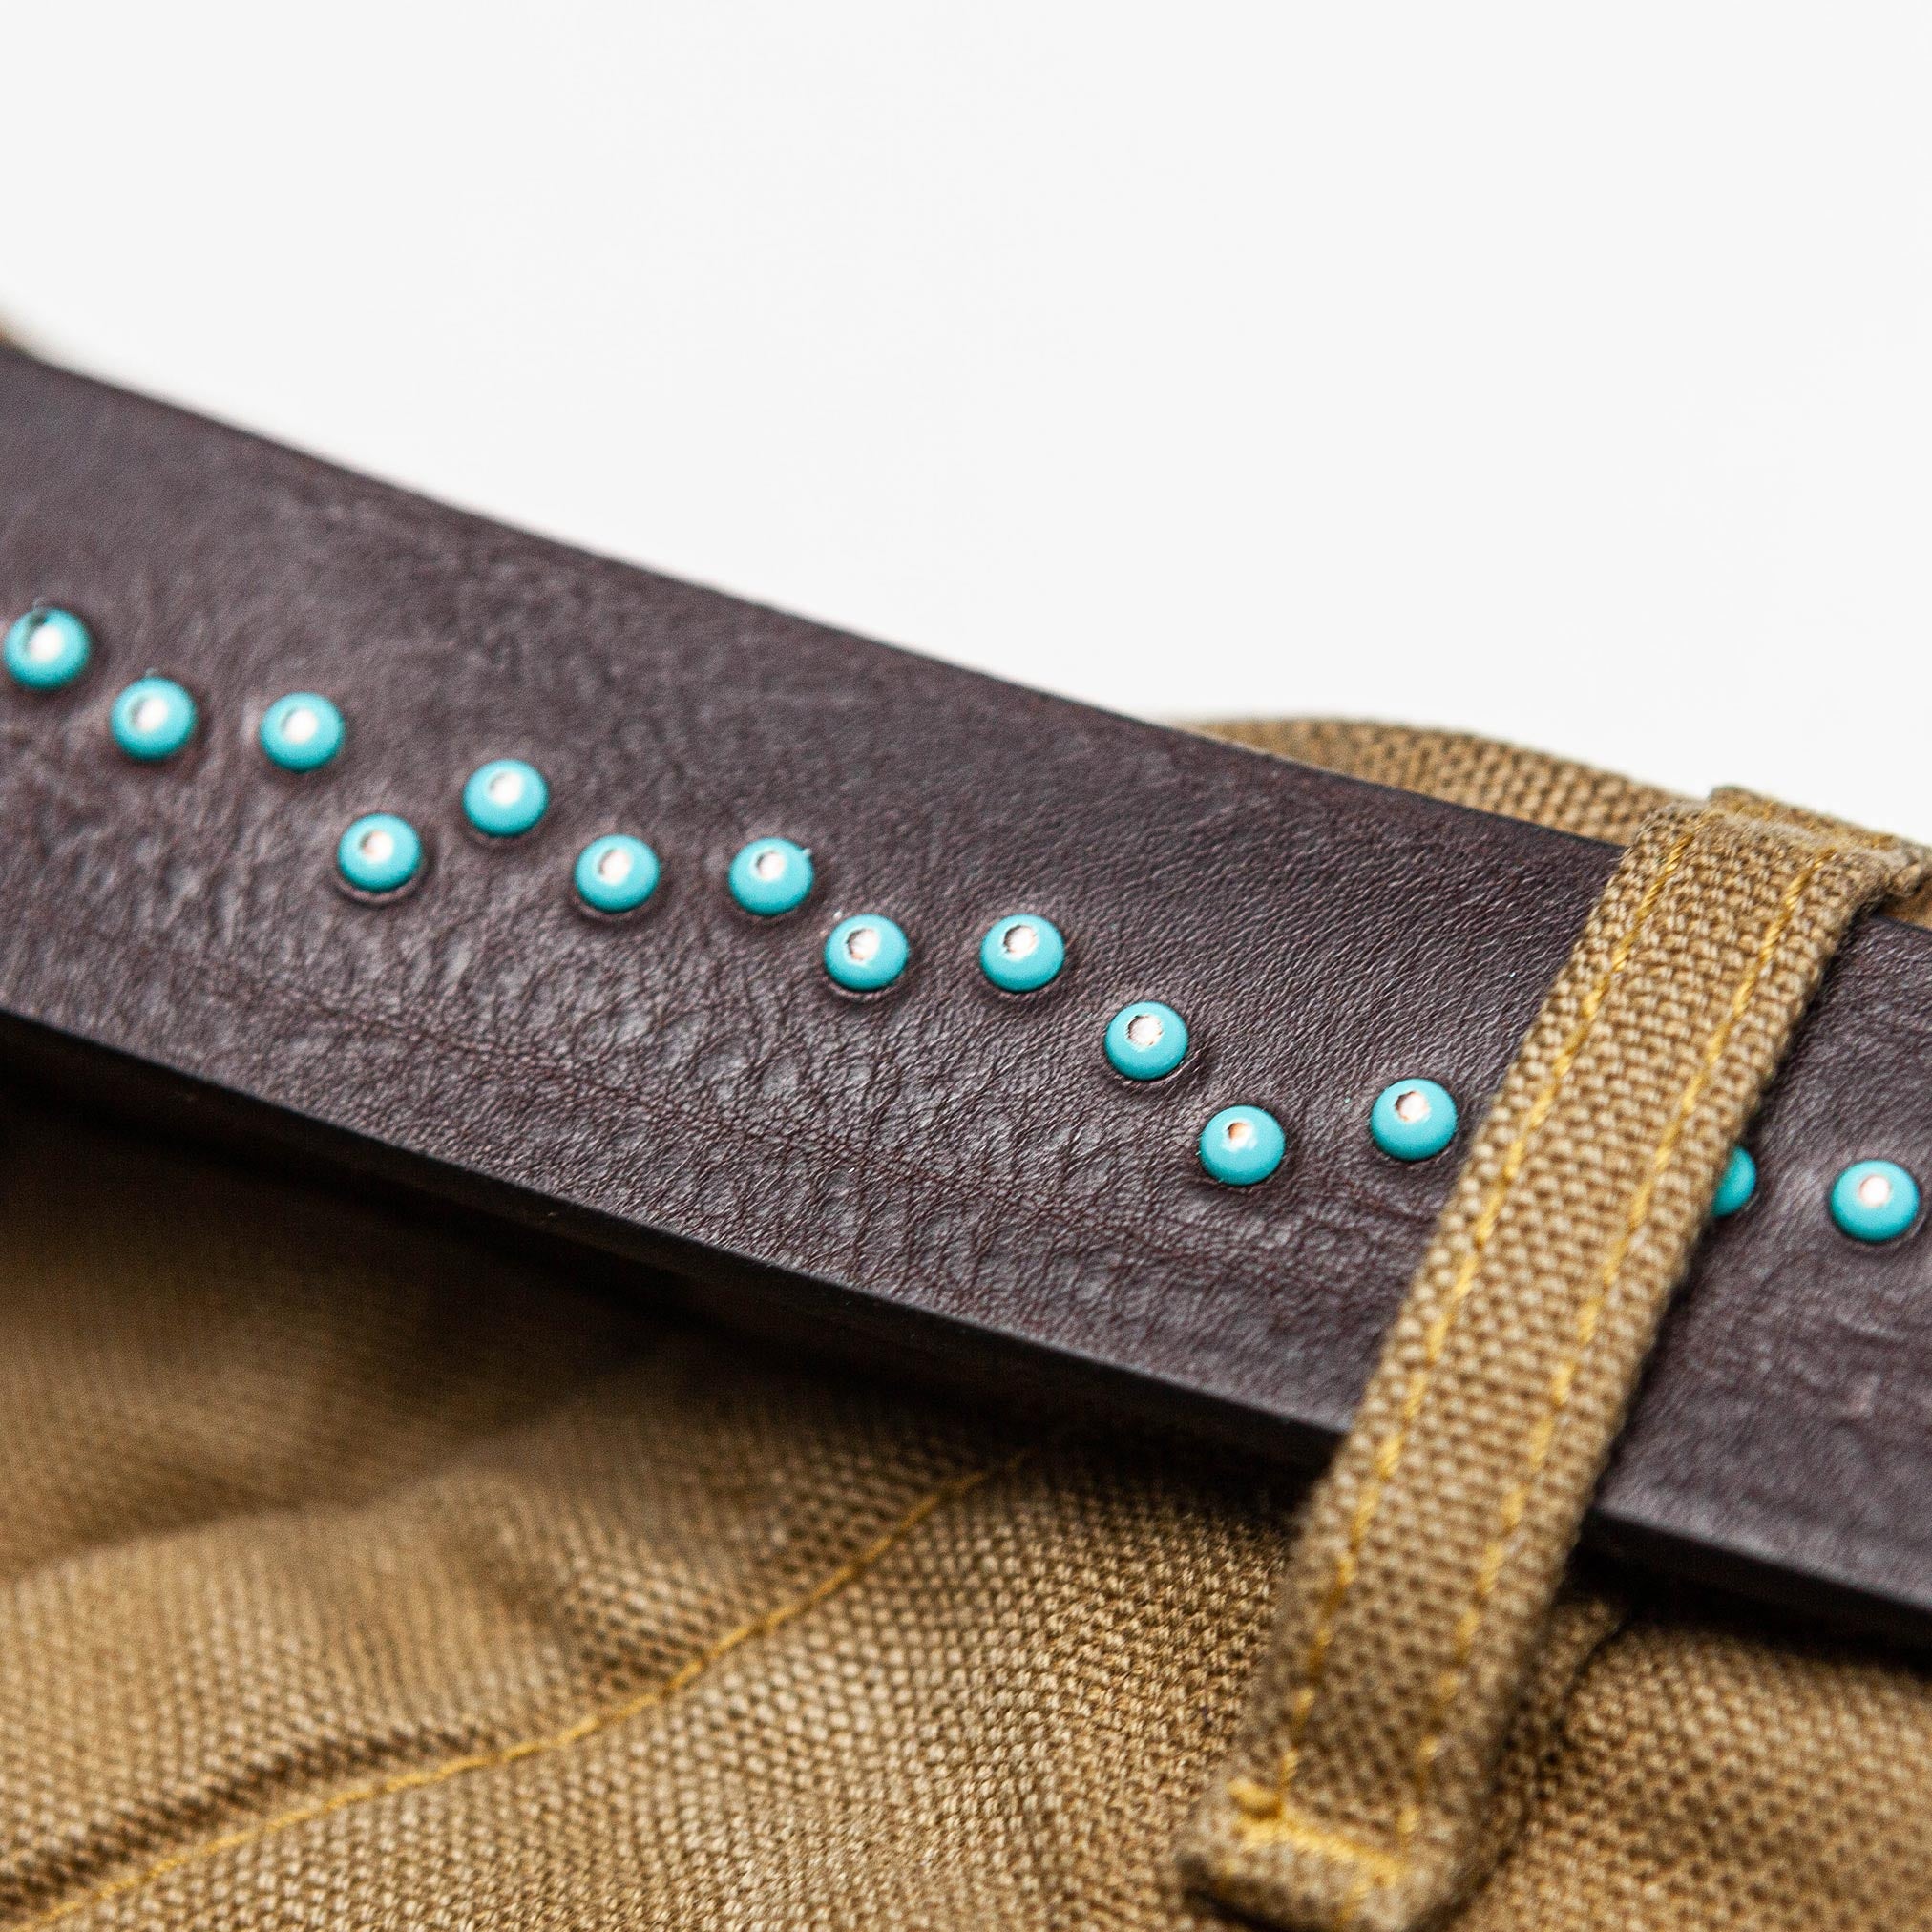 The Turquoise Dot Belt